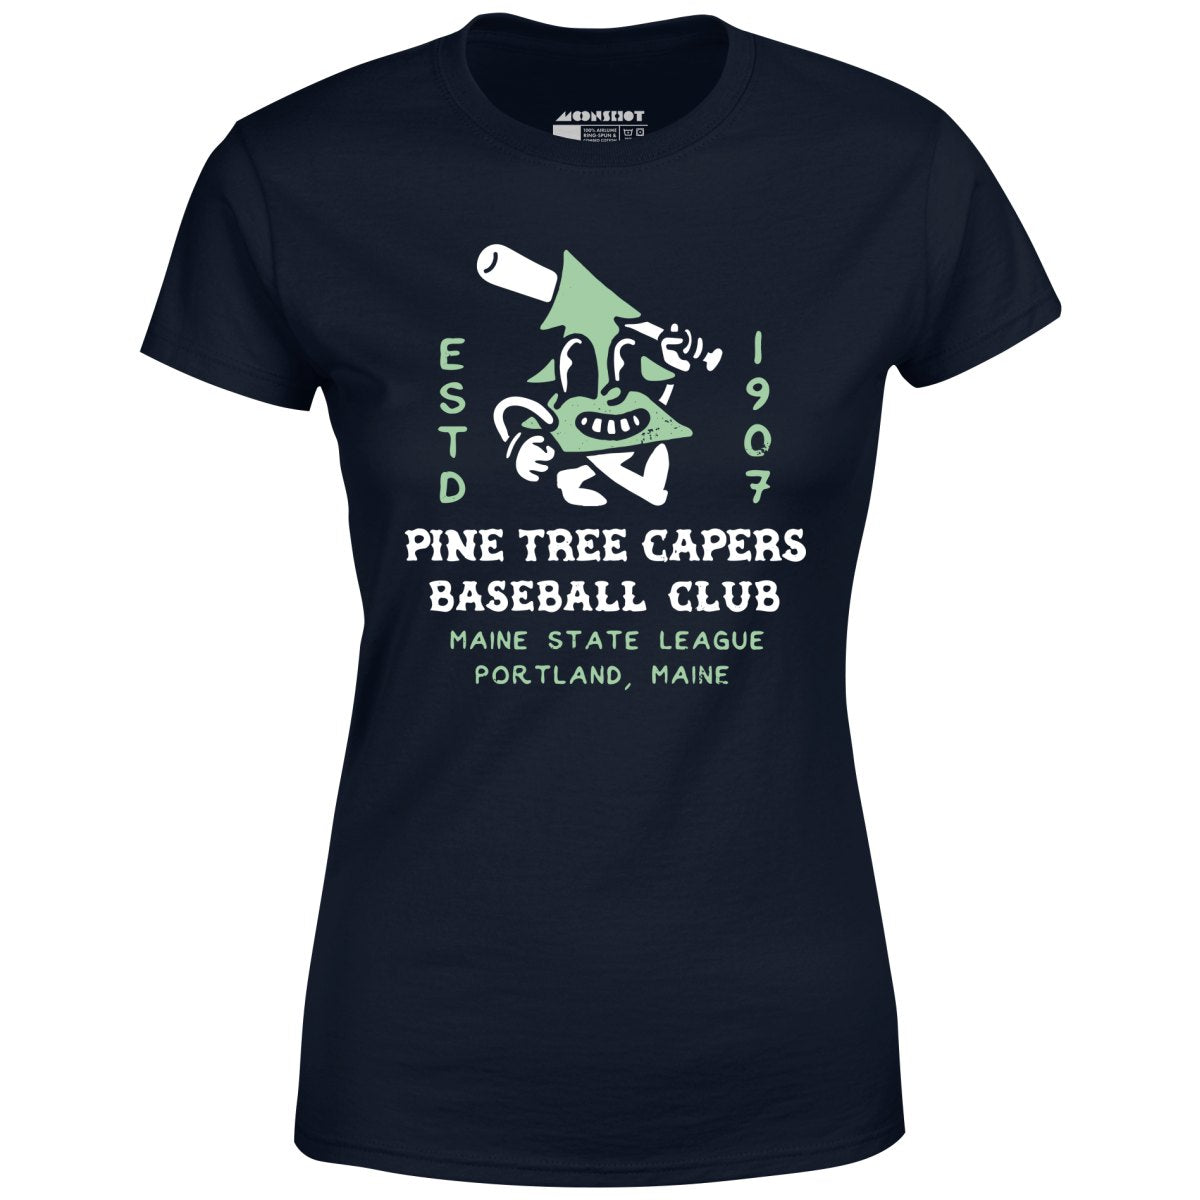 Pine Tree Capers - Portland, ME - Vintage Defunct Baseball Teams - Women's T-Shirt